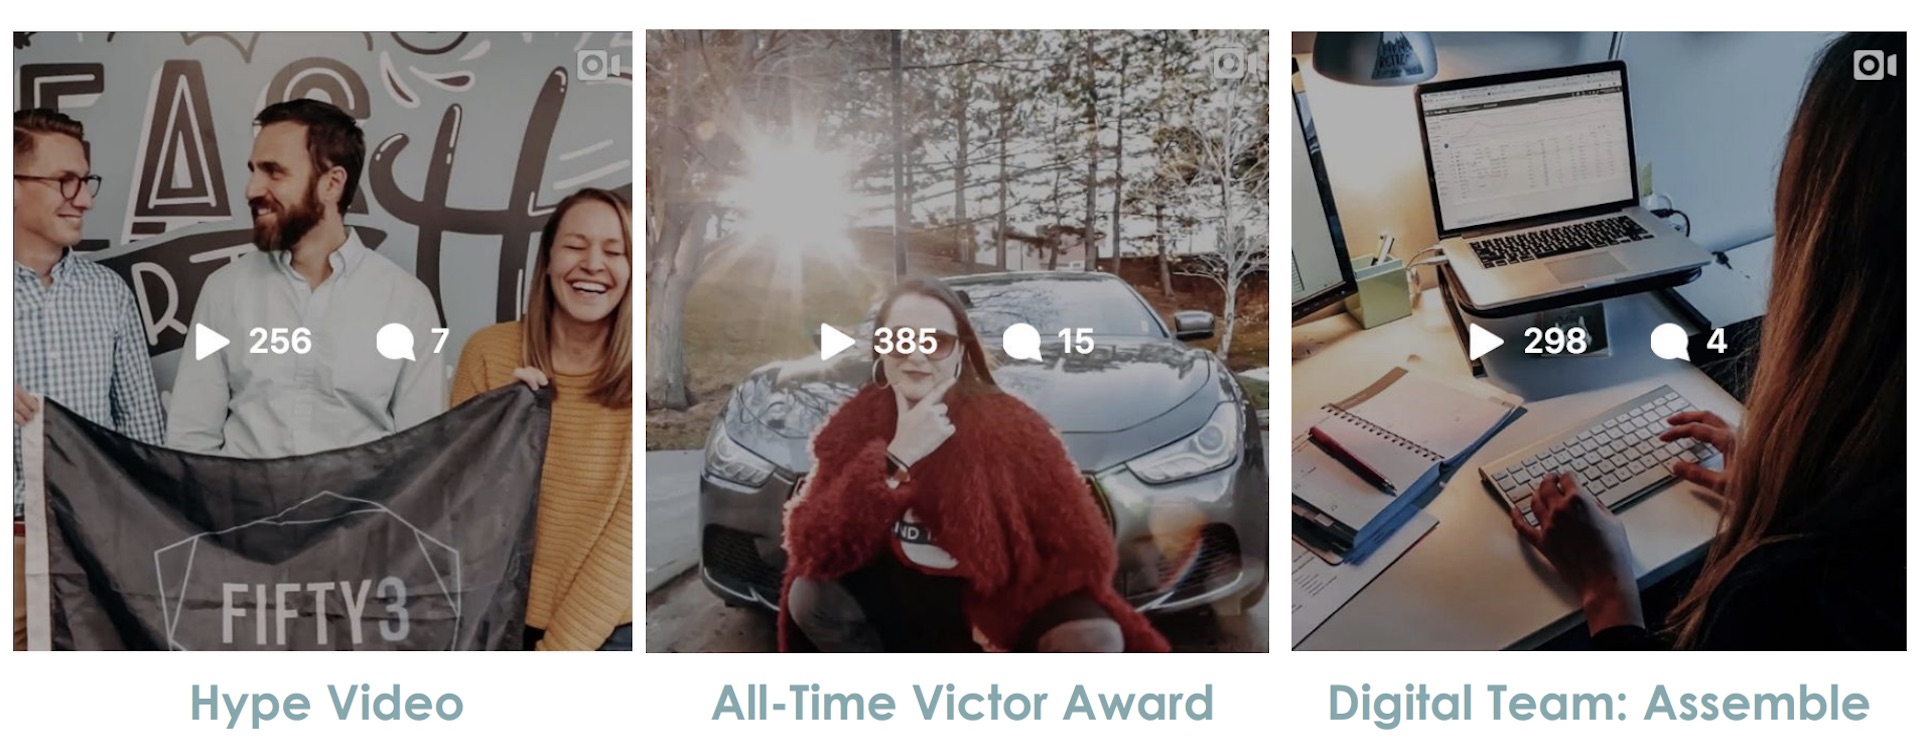 Vega Digital Awards Winner - Agency FIFTY3 Social Media Campaign 2019, Agency Fifty3